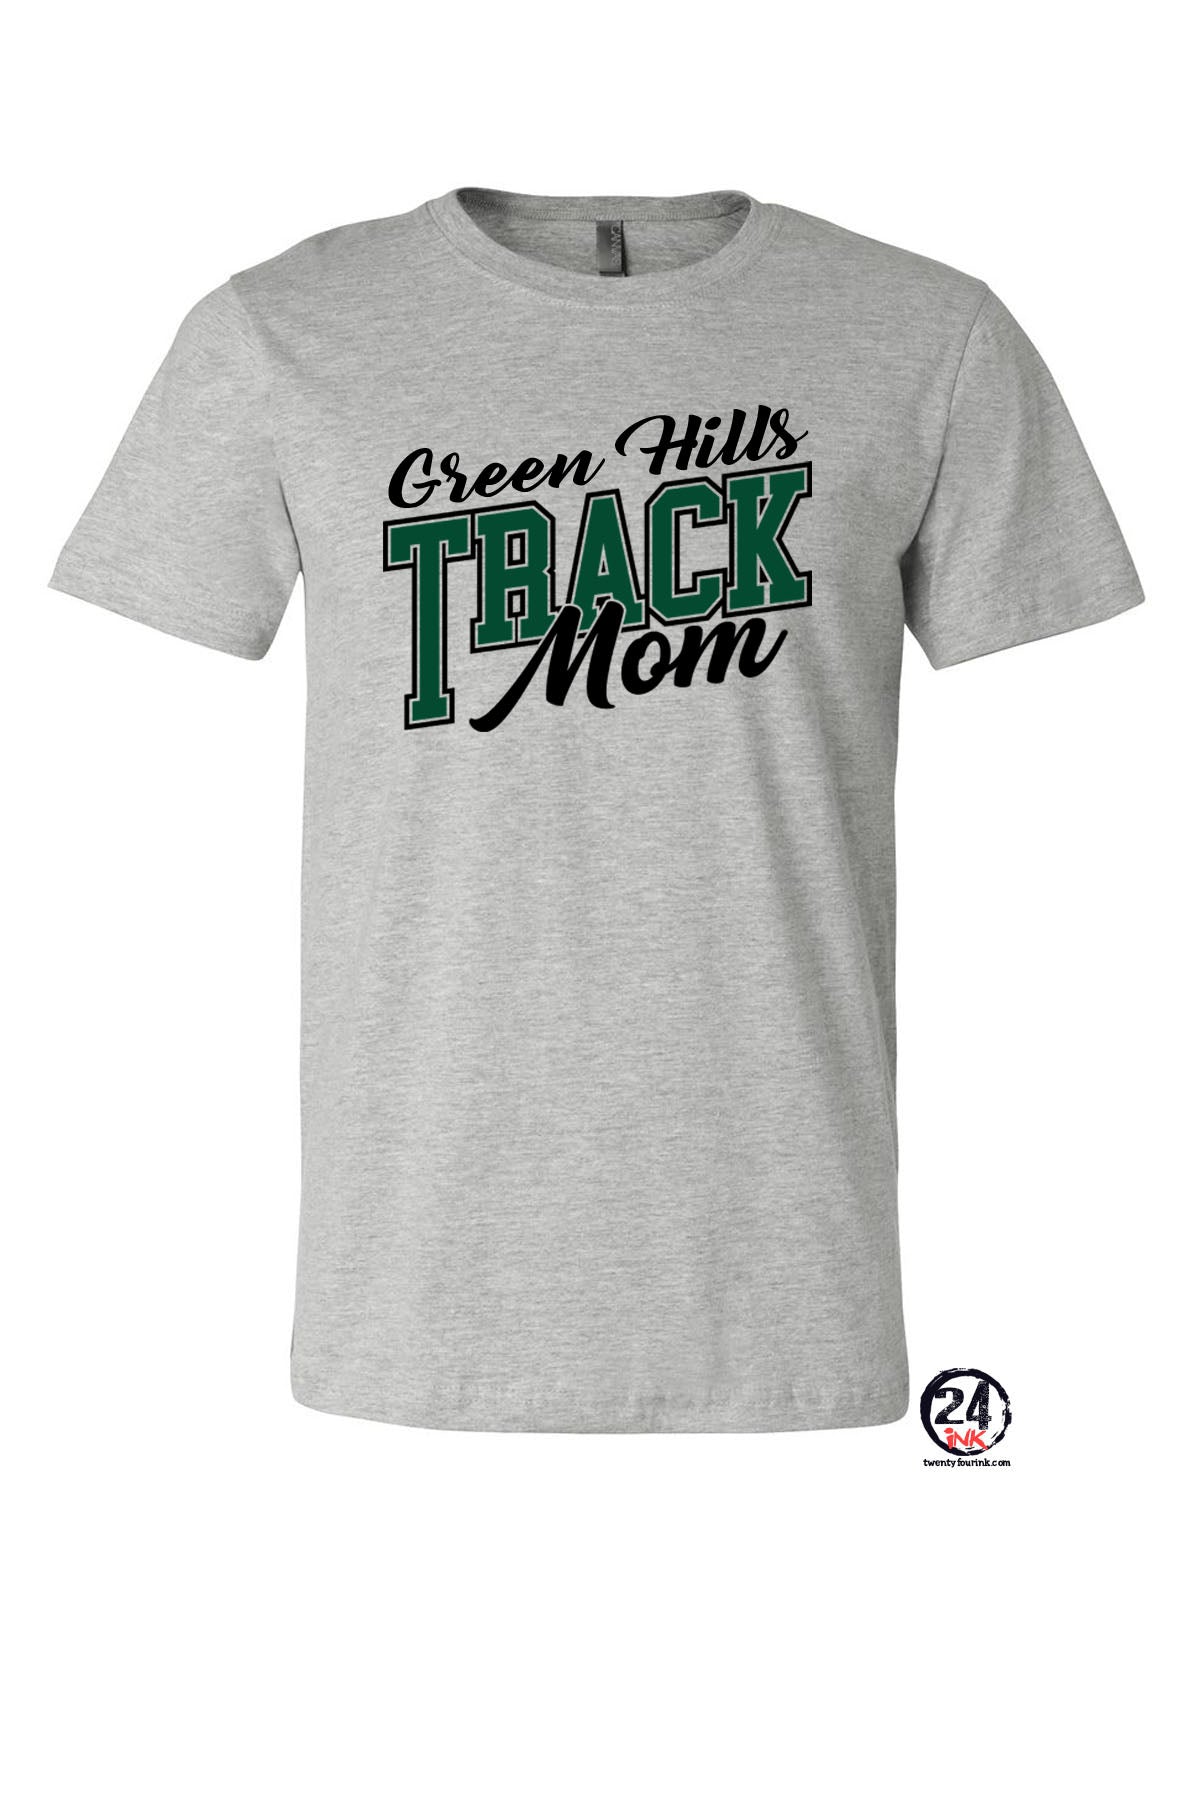 Green Hills Track Design 5 T-Shirt